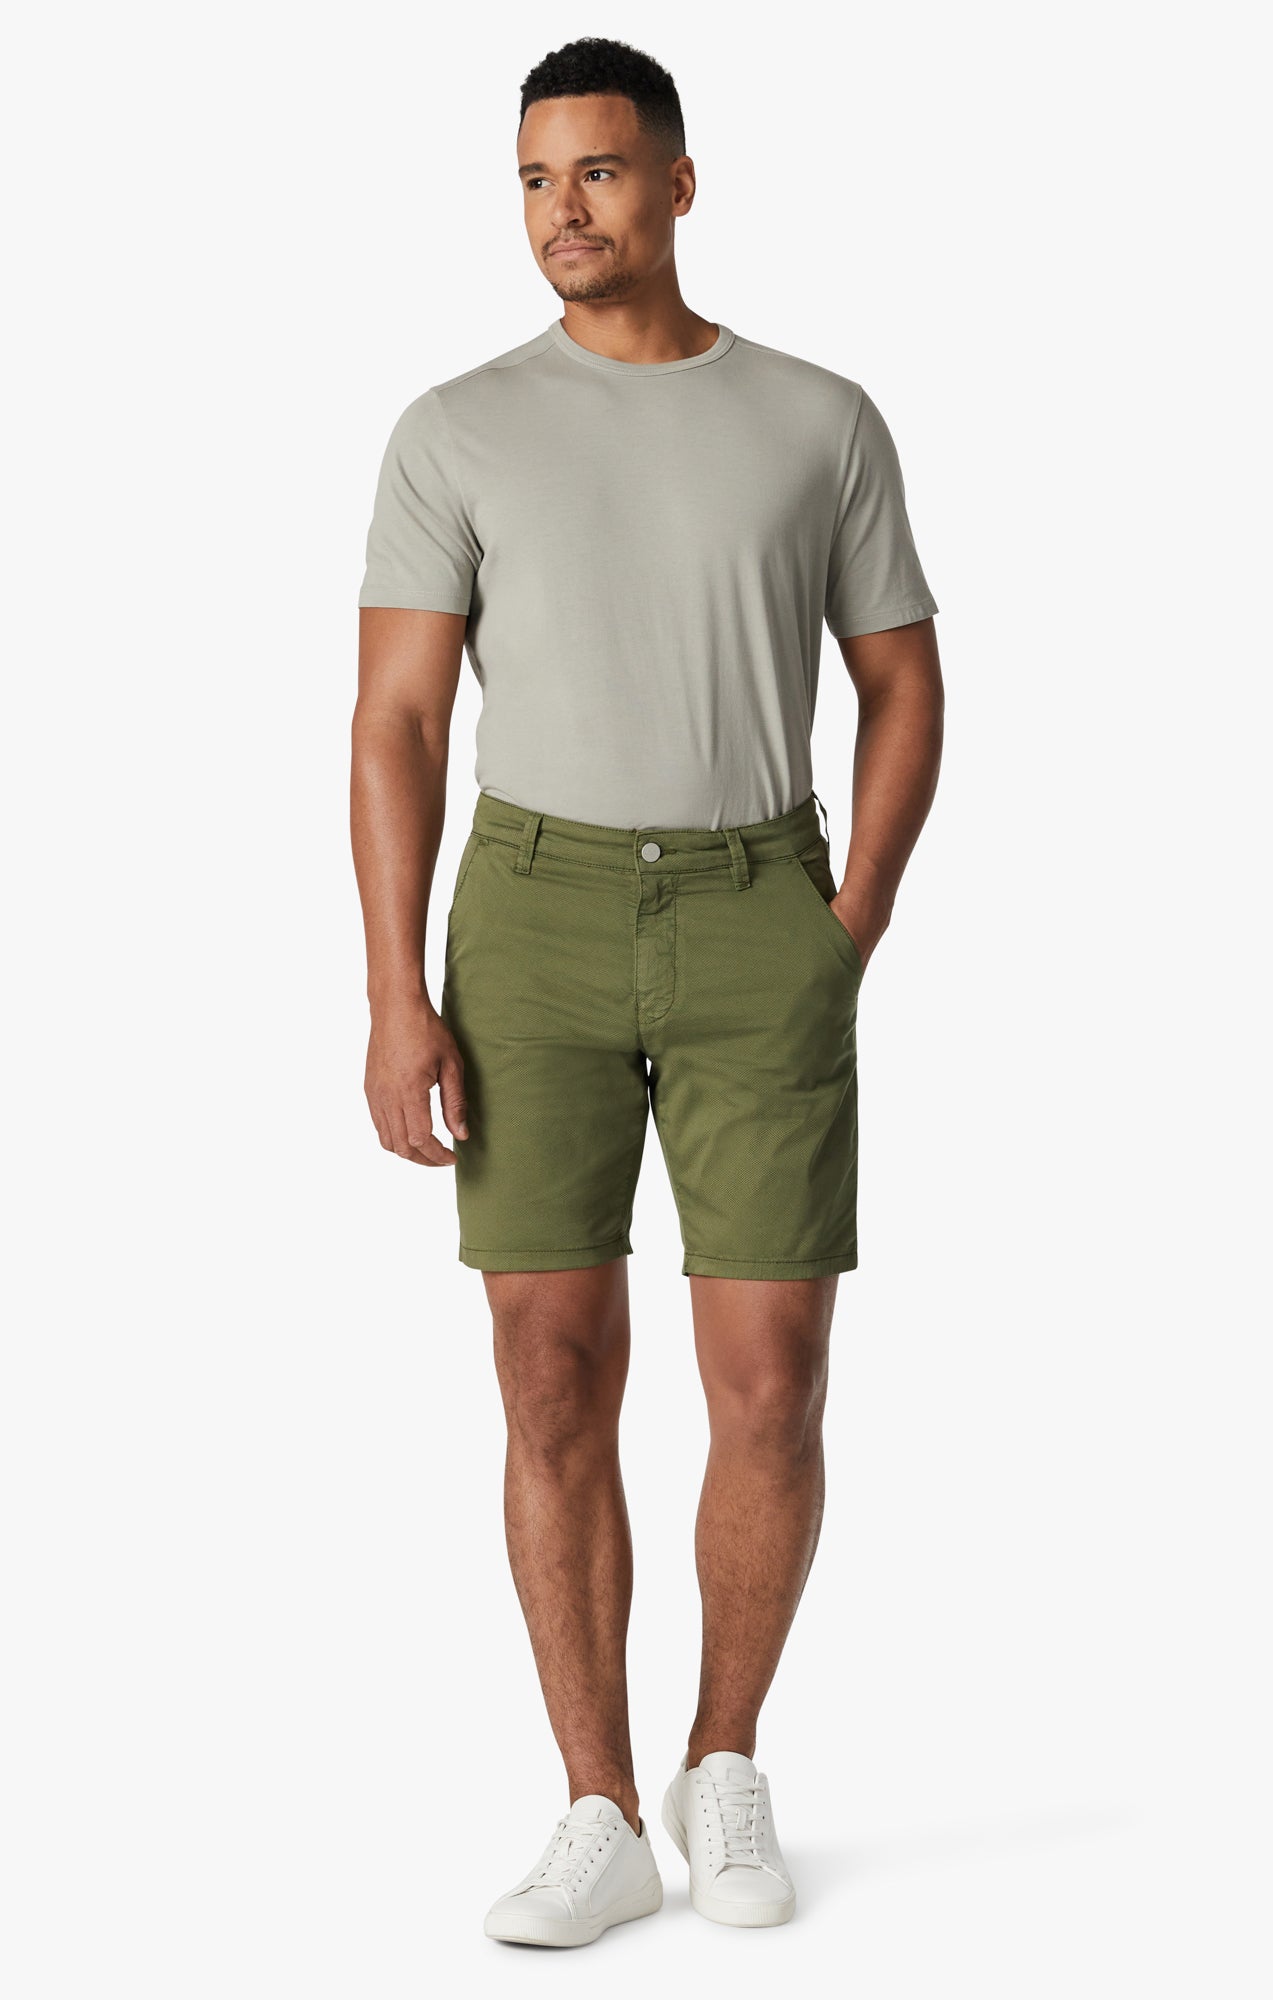 Arizona Shorts In Green Tie Print Image 1